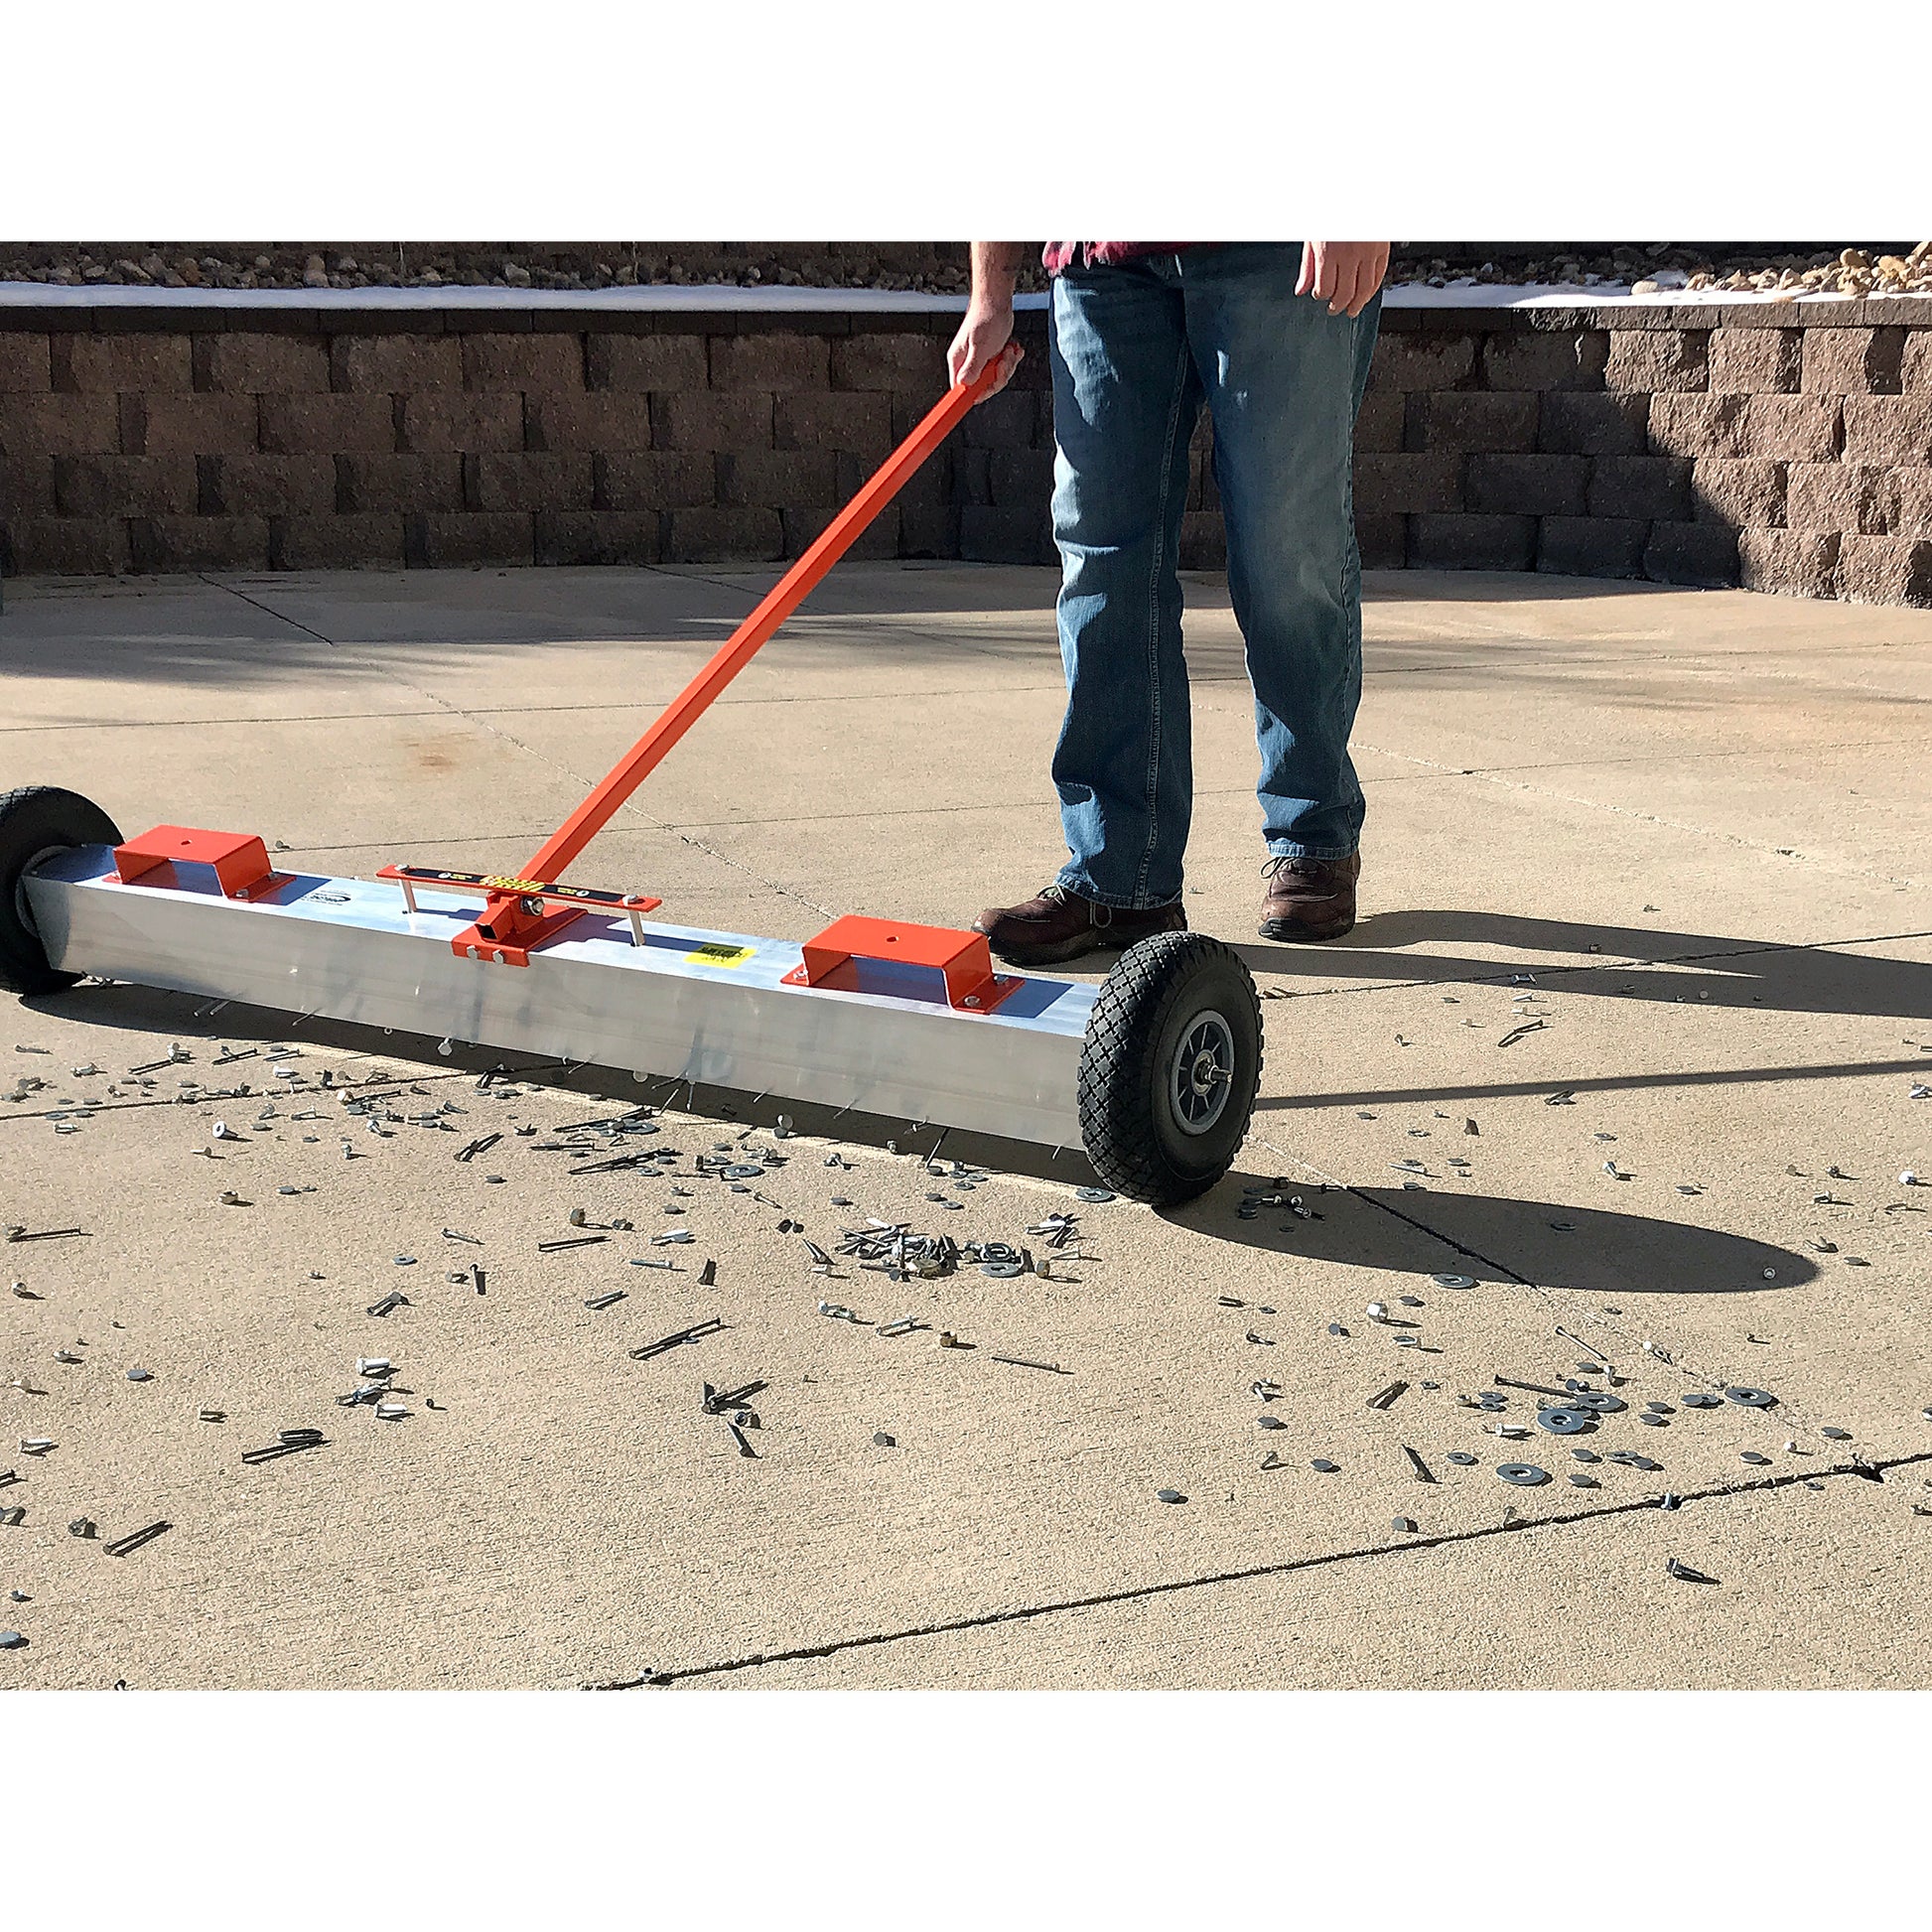 Load image into Gallery viewer, VSM-48 VersaSWEEP™ 4-in-1 Magnetic Sweeper with Quick Release - Man Sweeping Debris off Sidewalk